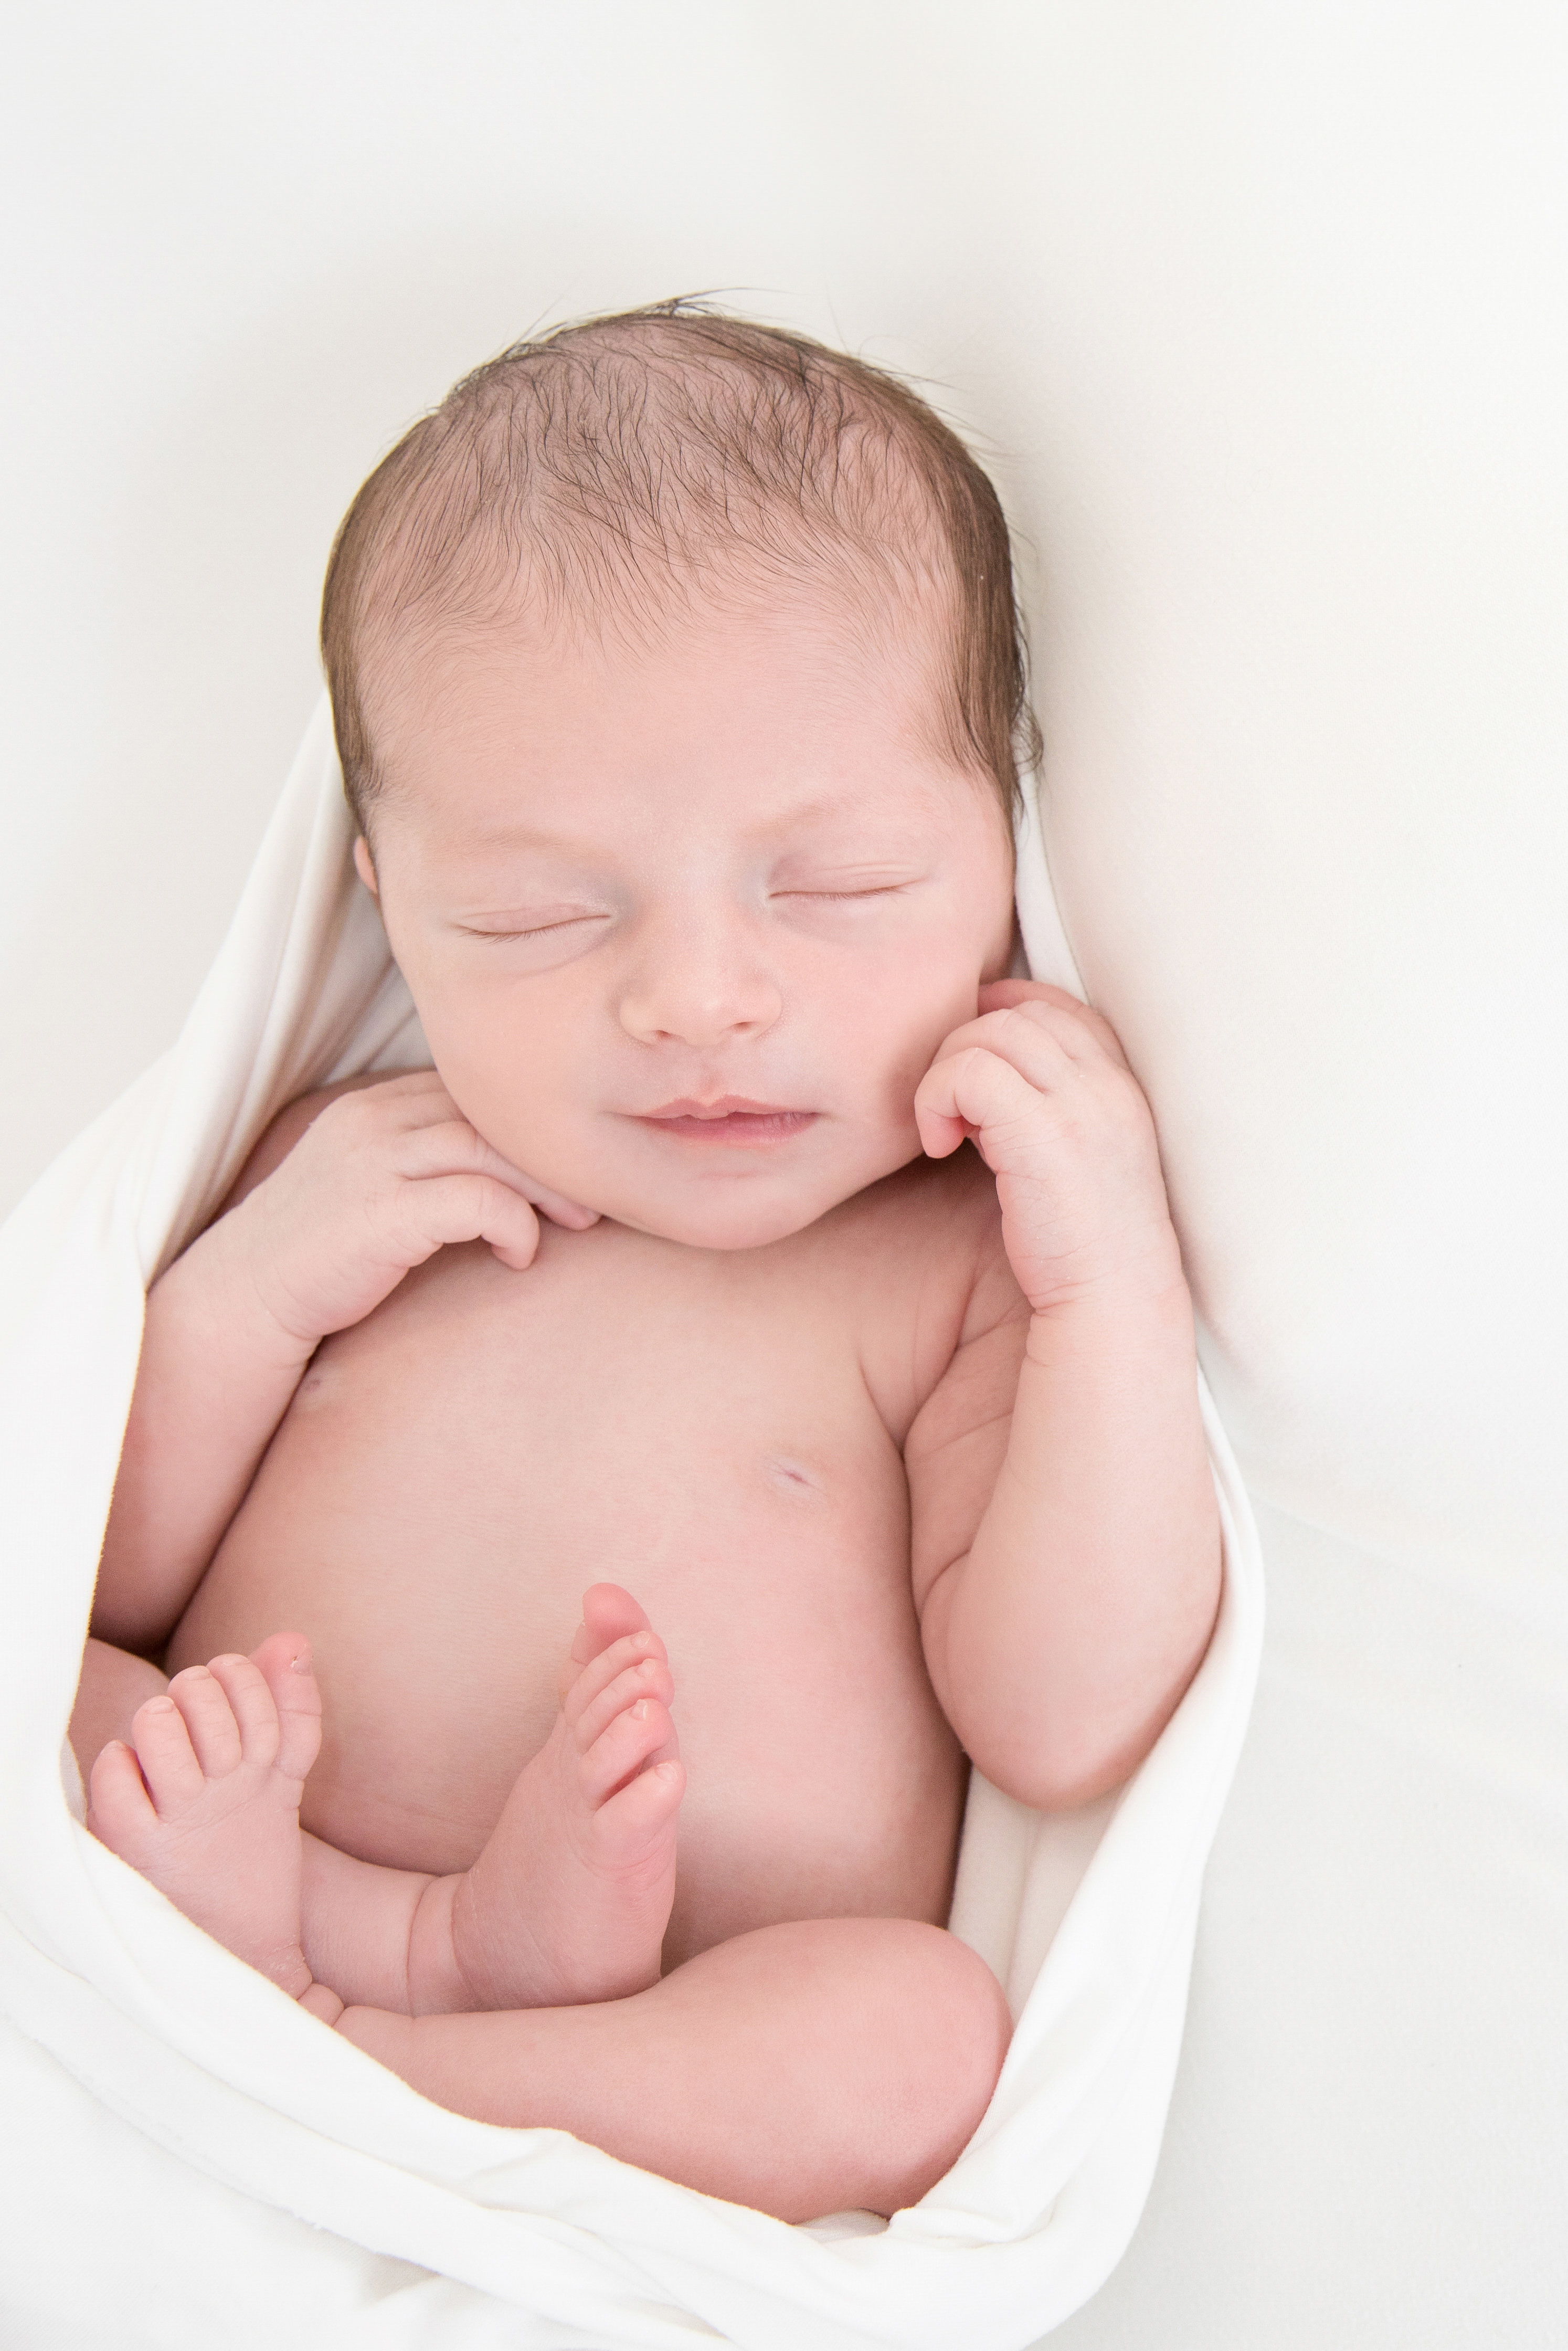 Simple portrait of a newborn sleeping